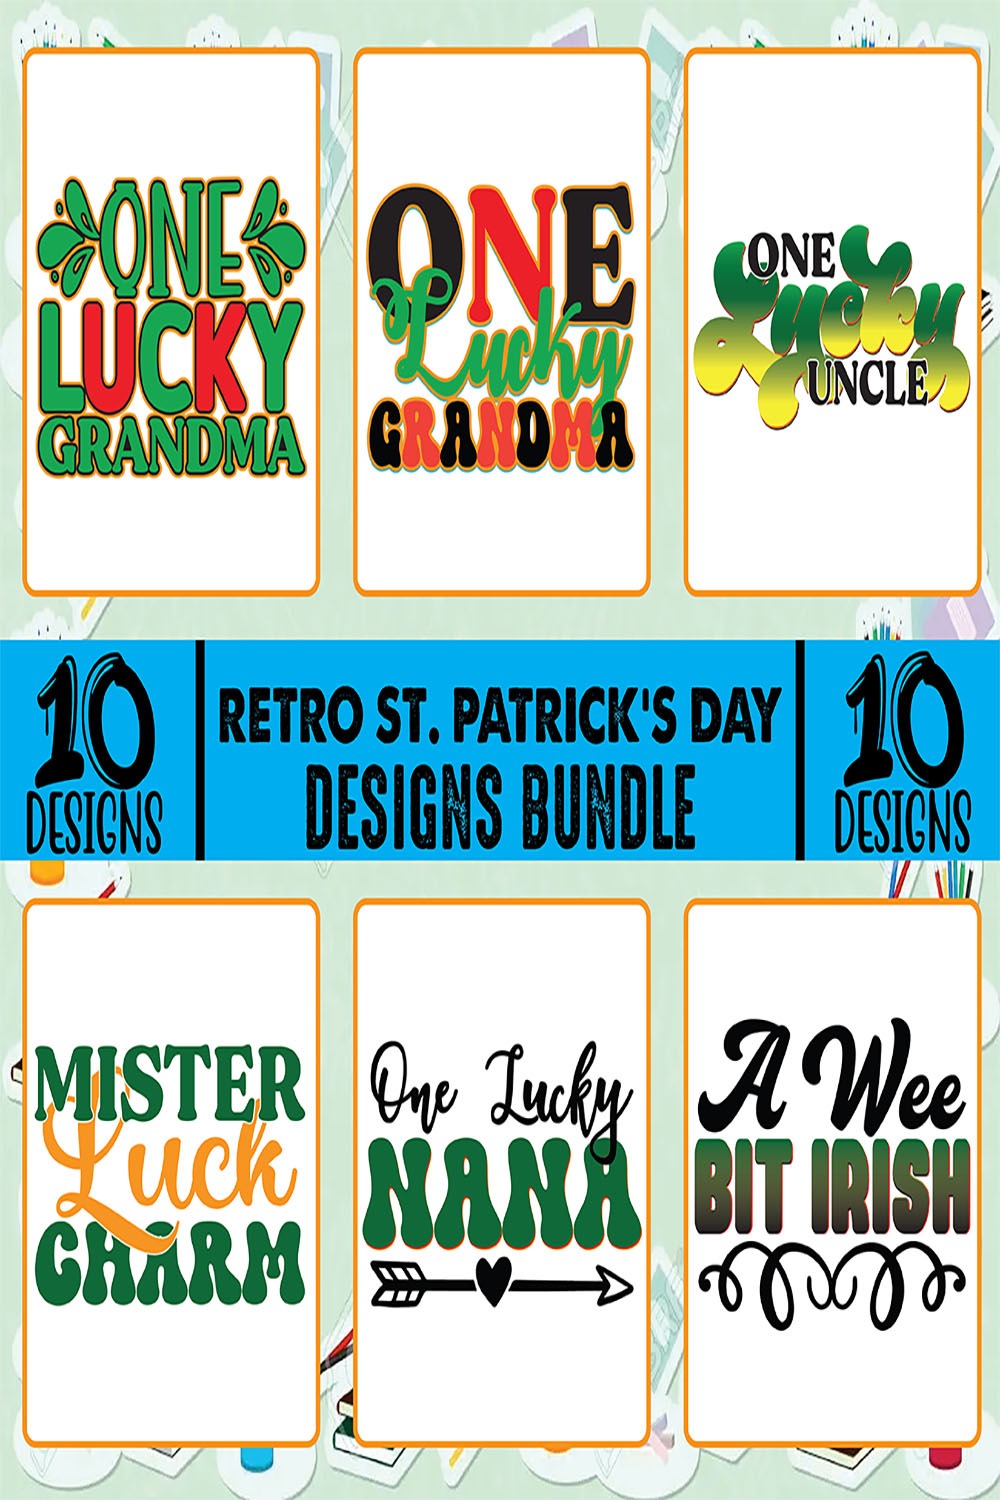 St. Patrick’s Day Retro Designs pinterest image.